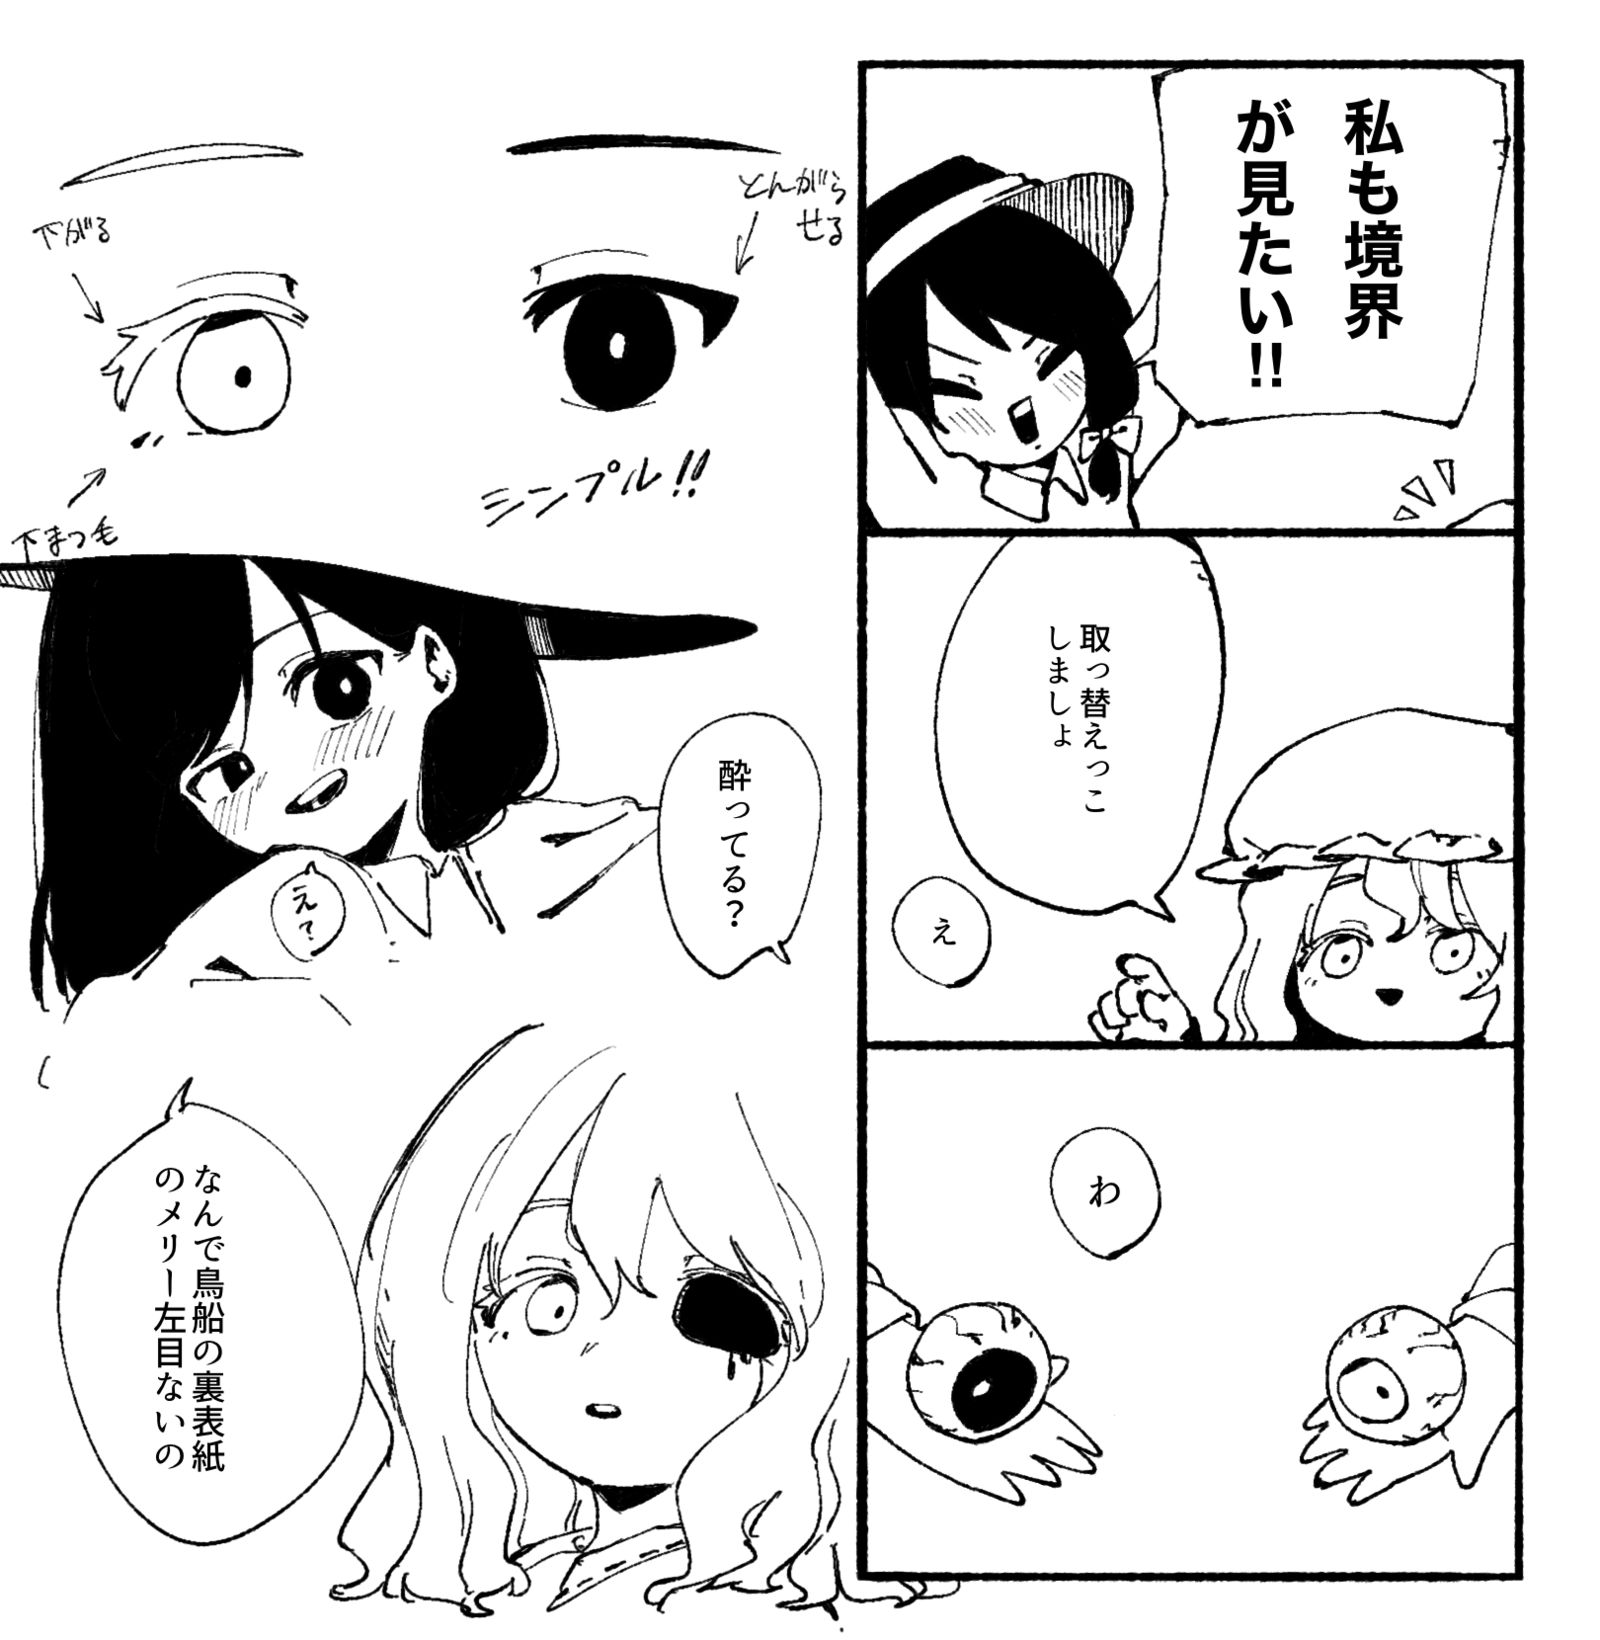 眼睛-东方Project漫画